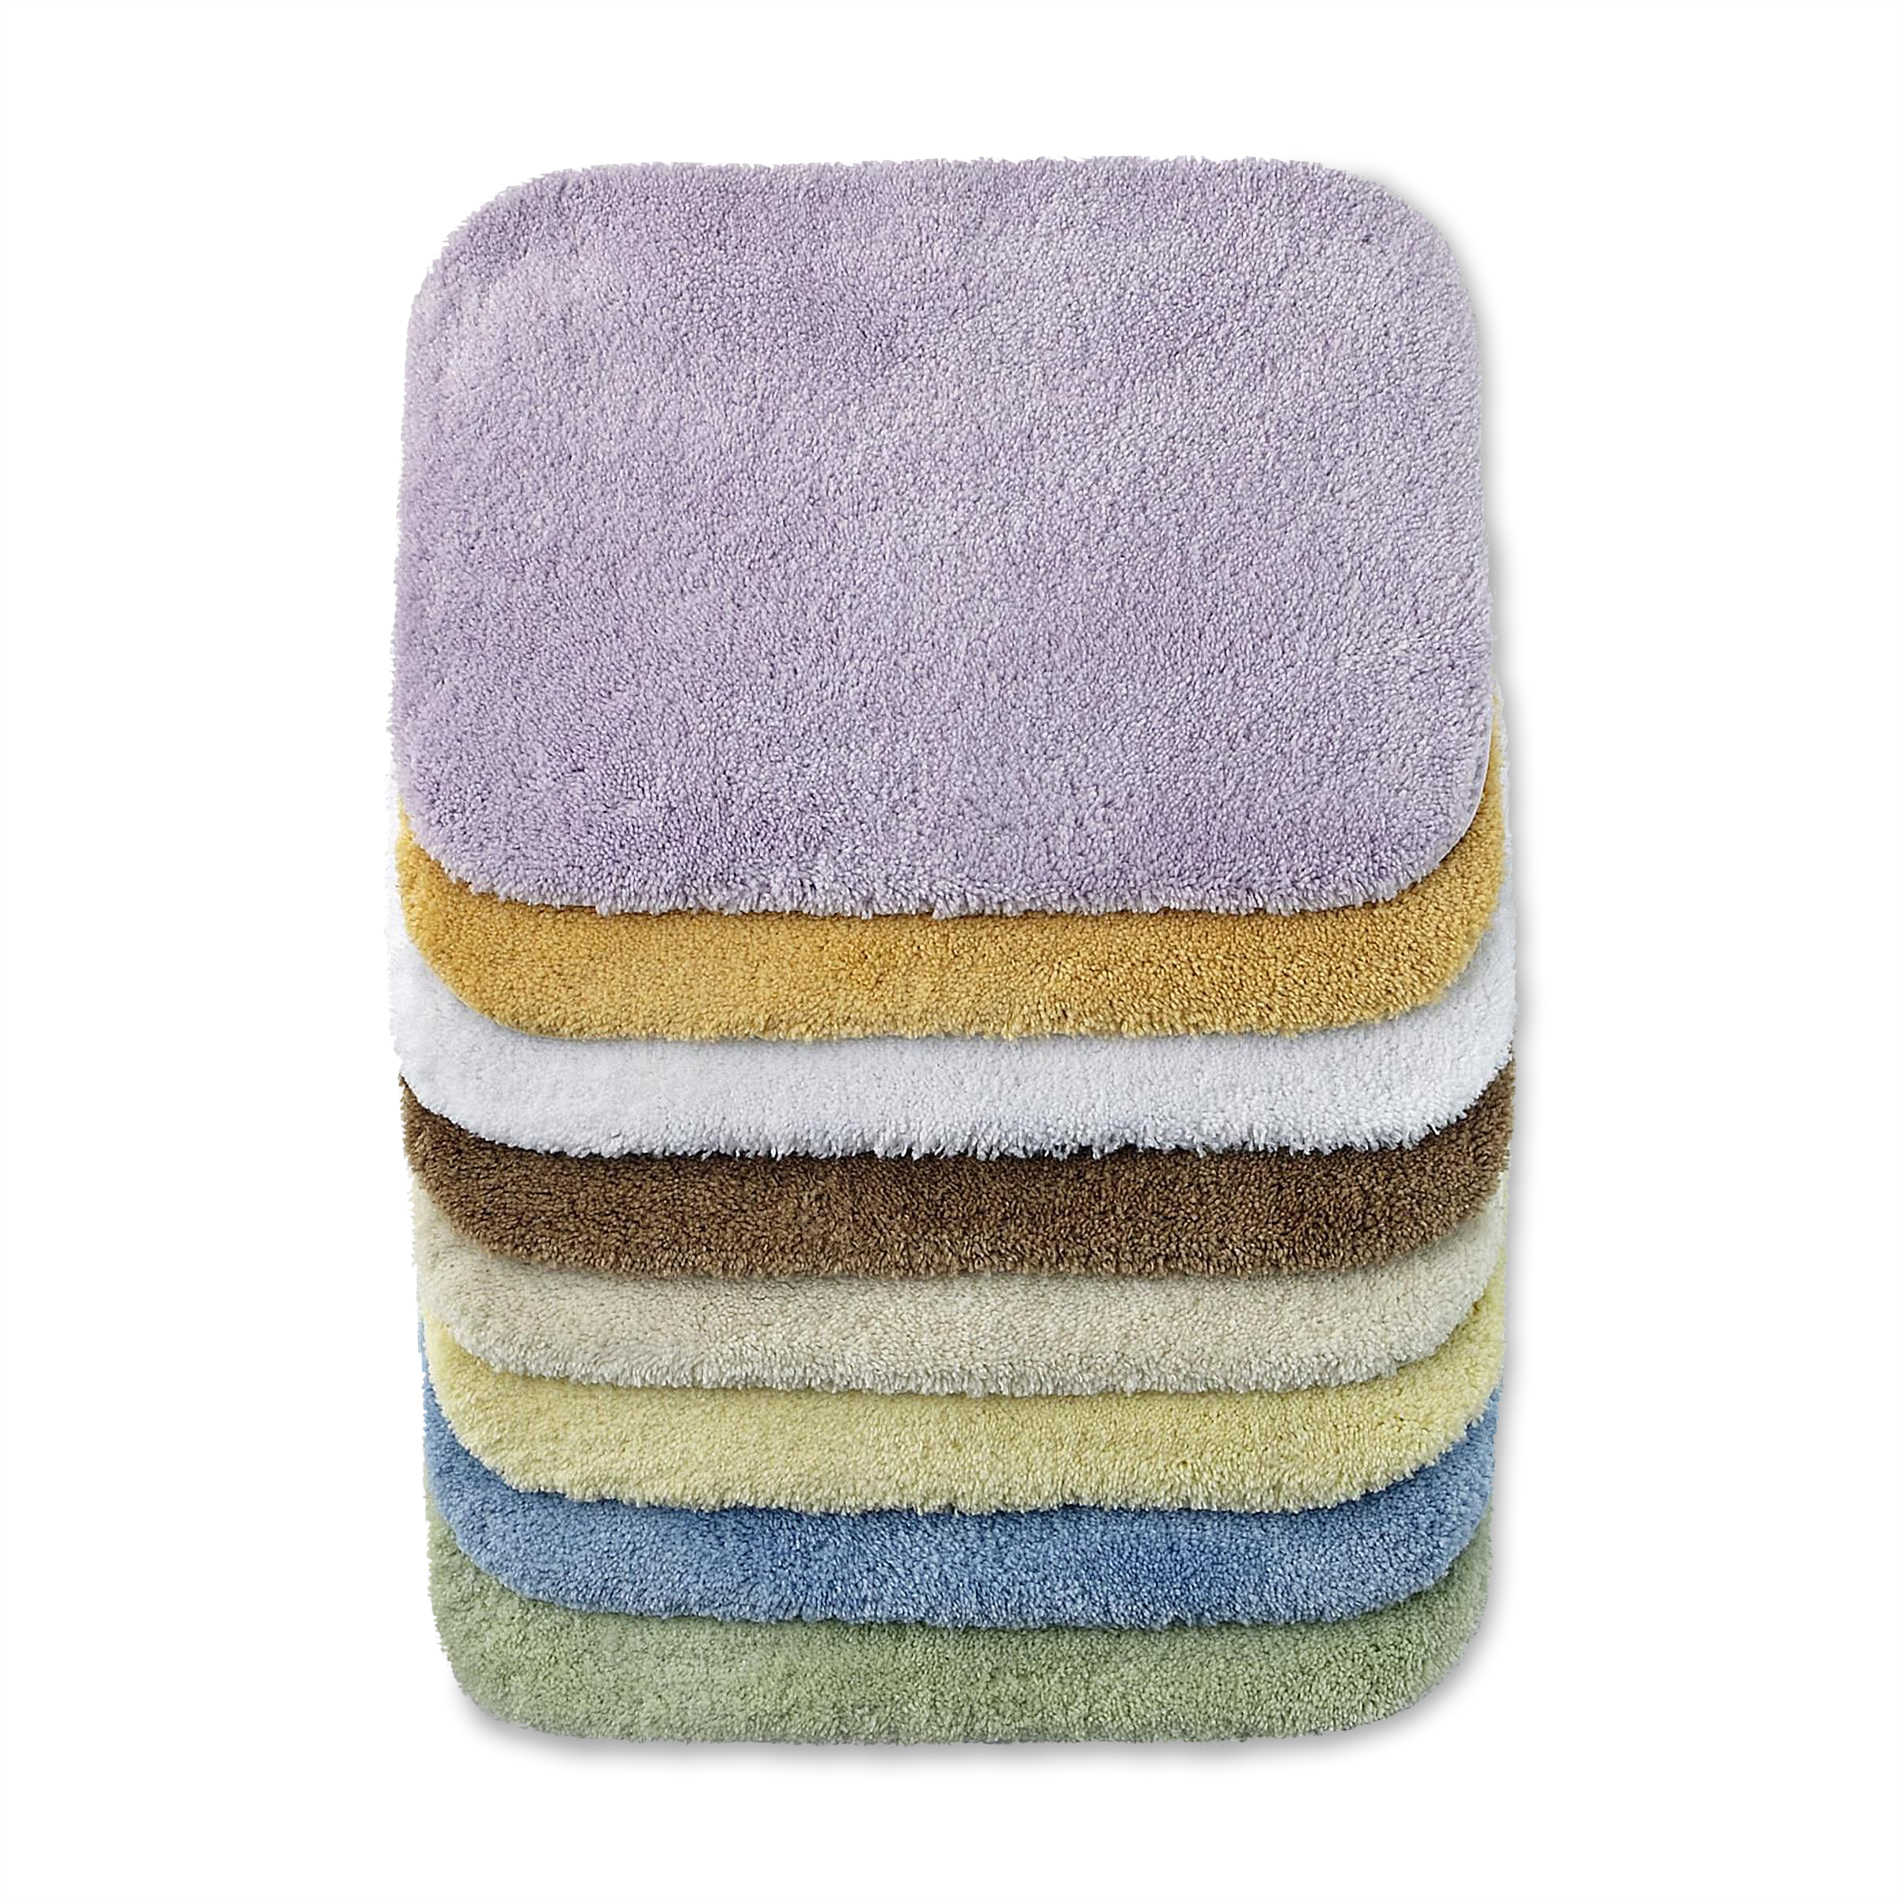 Colormate Basics Bath Rugs  Universal Lid  or Contour Rug